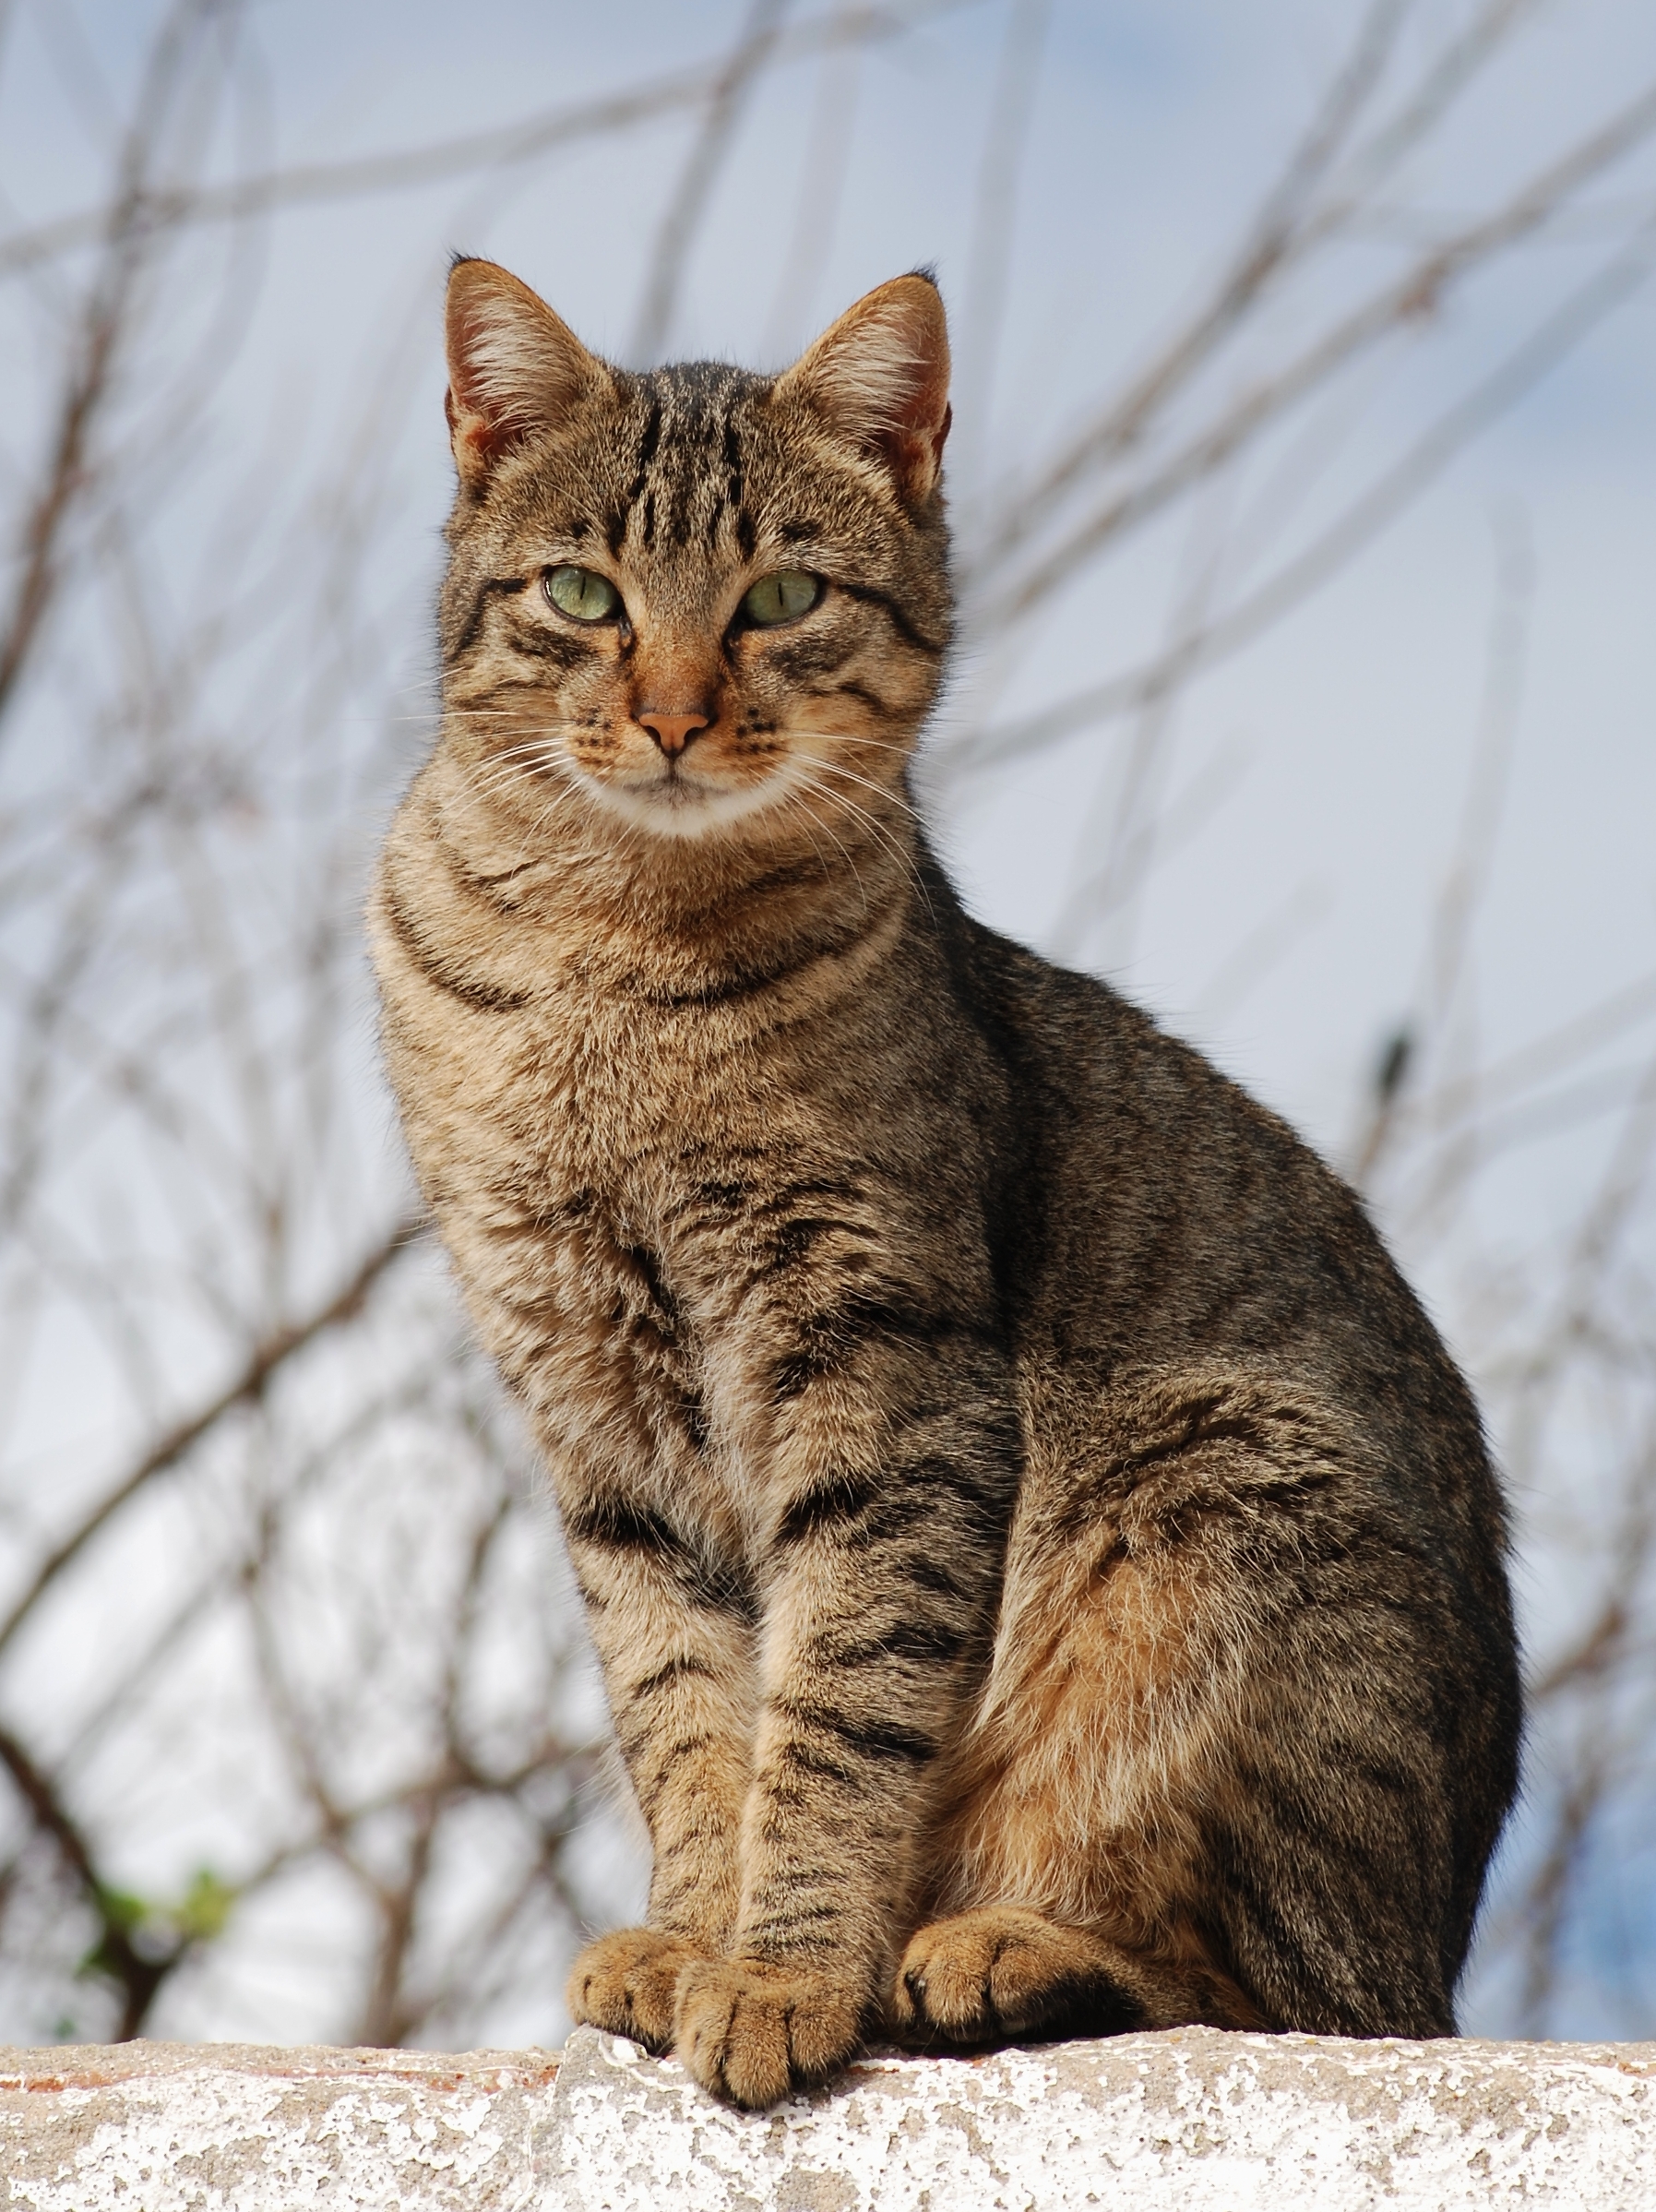 Tabby cat - Wikipedia